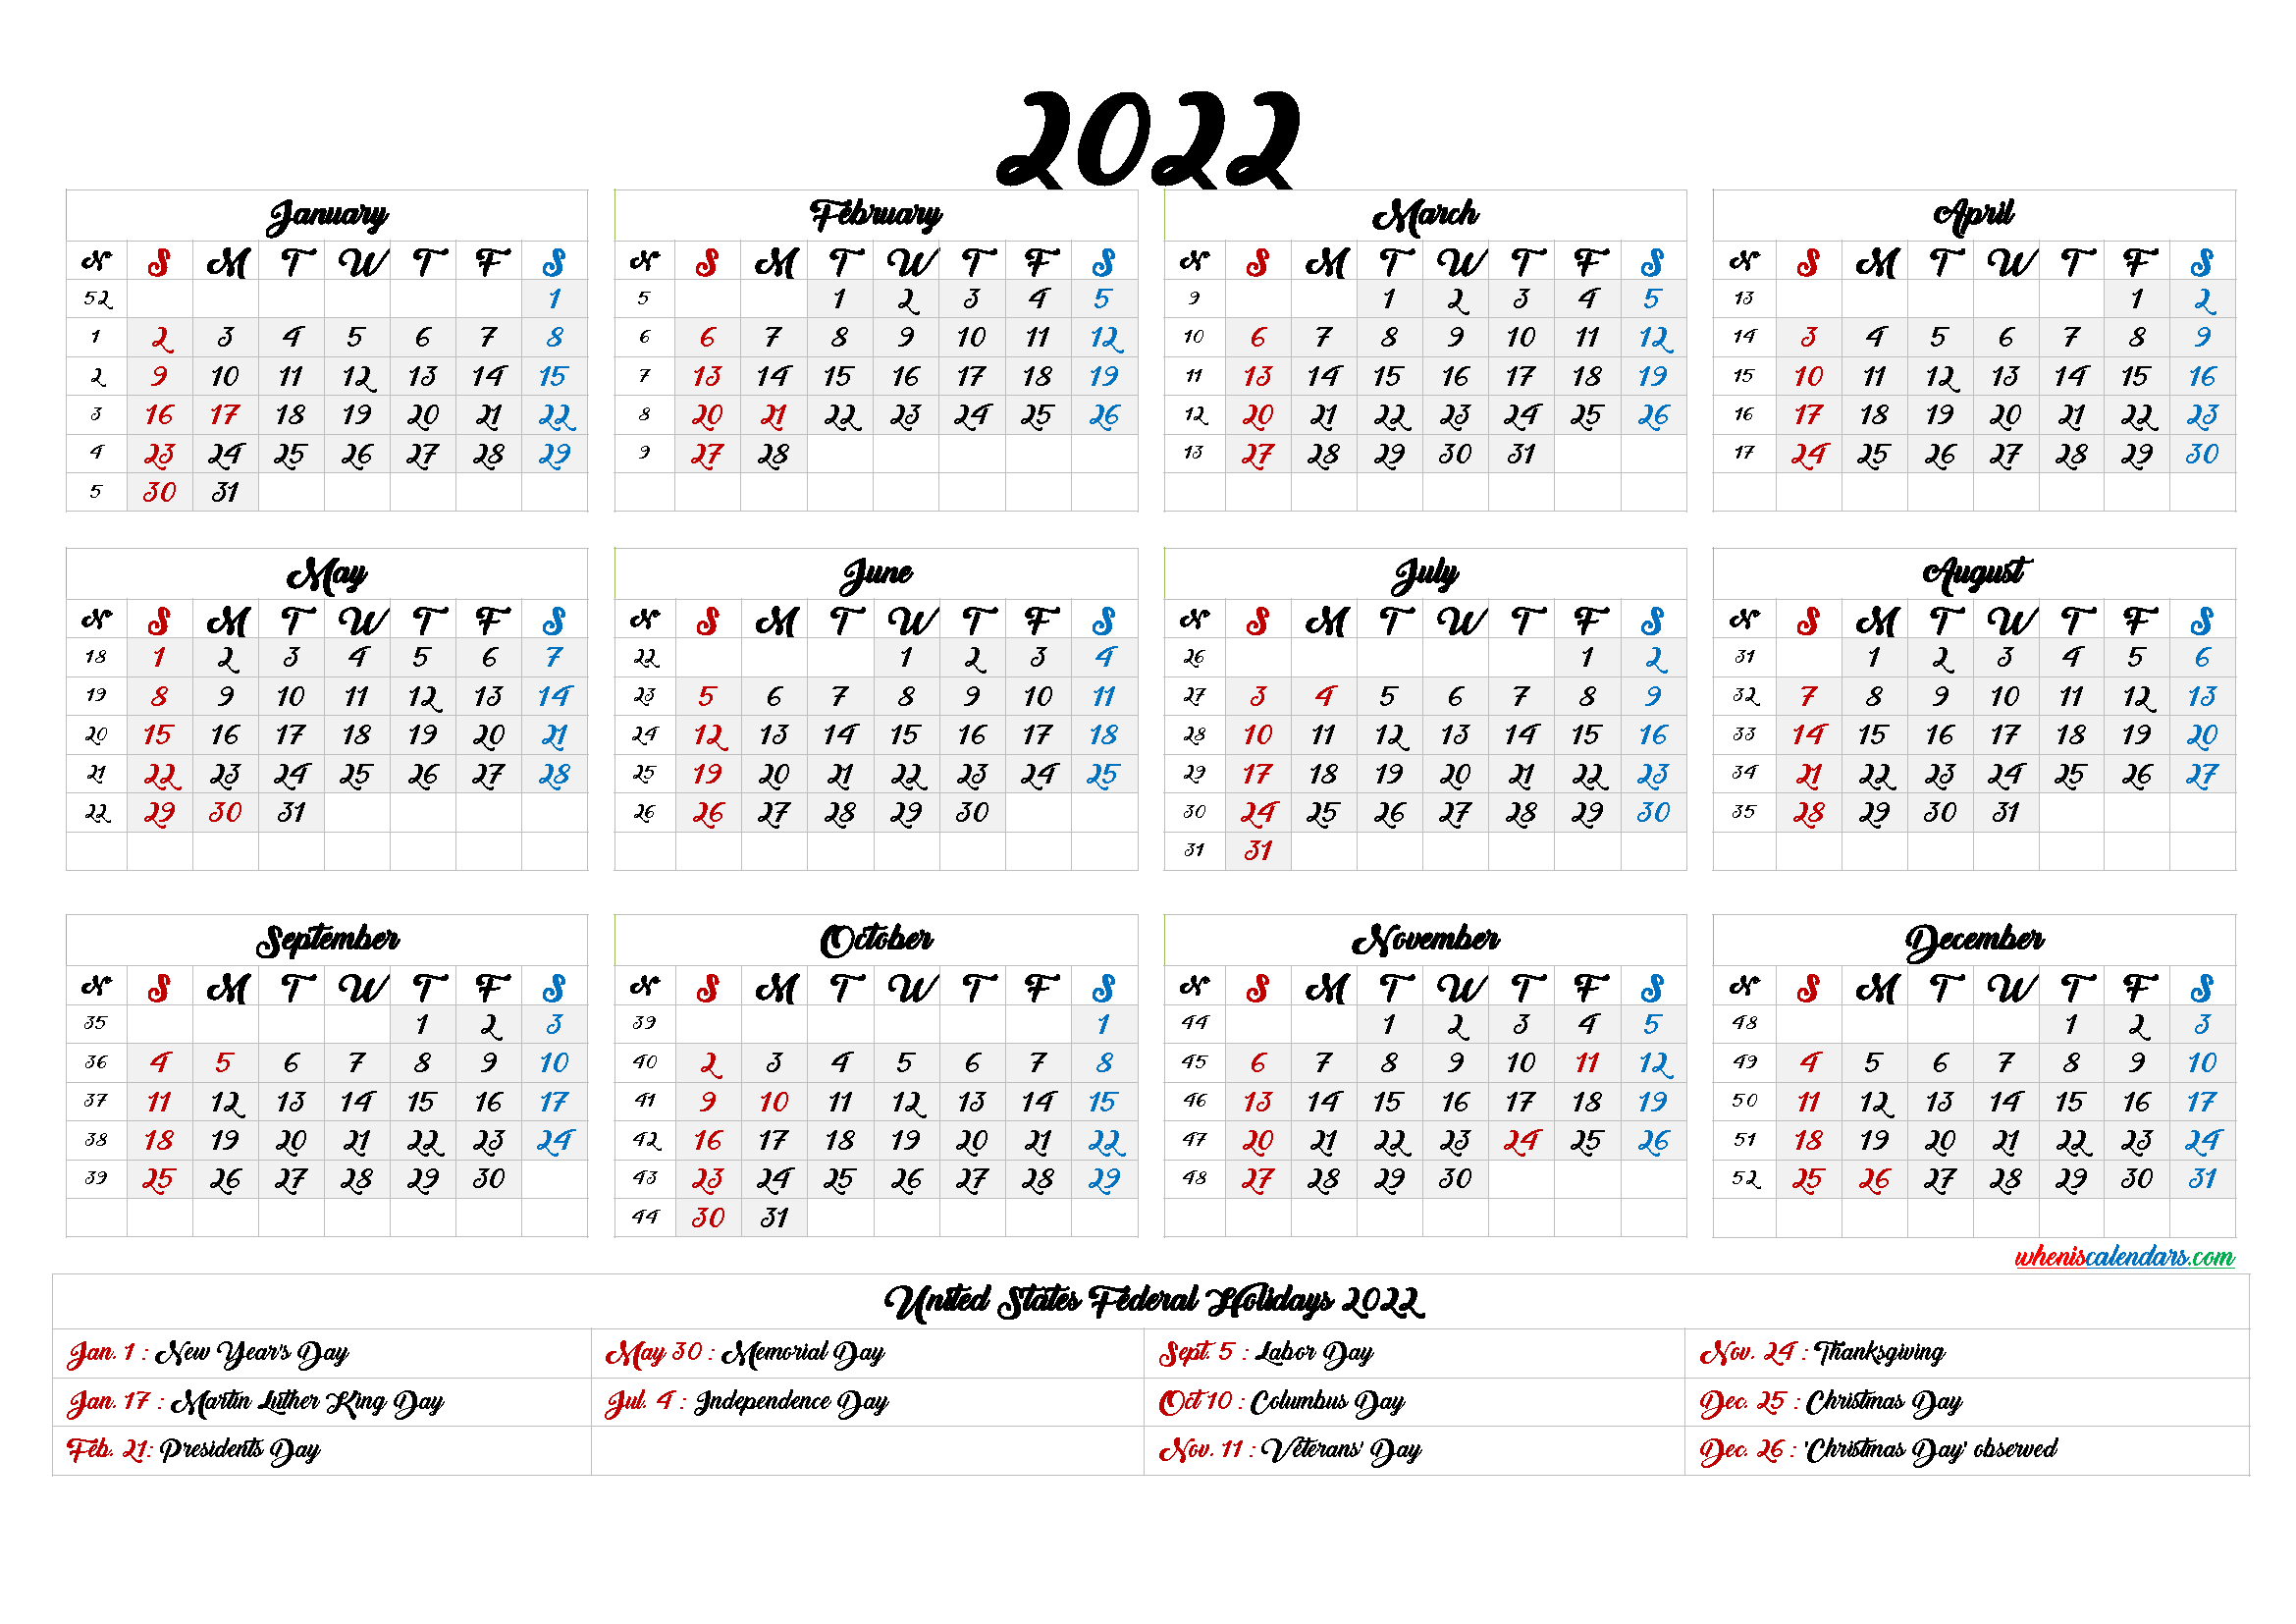 April 13, 2021 - Calendar 2021